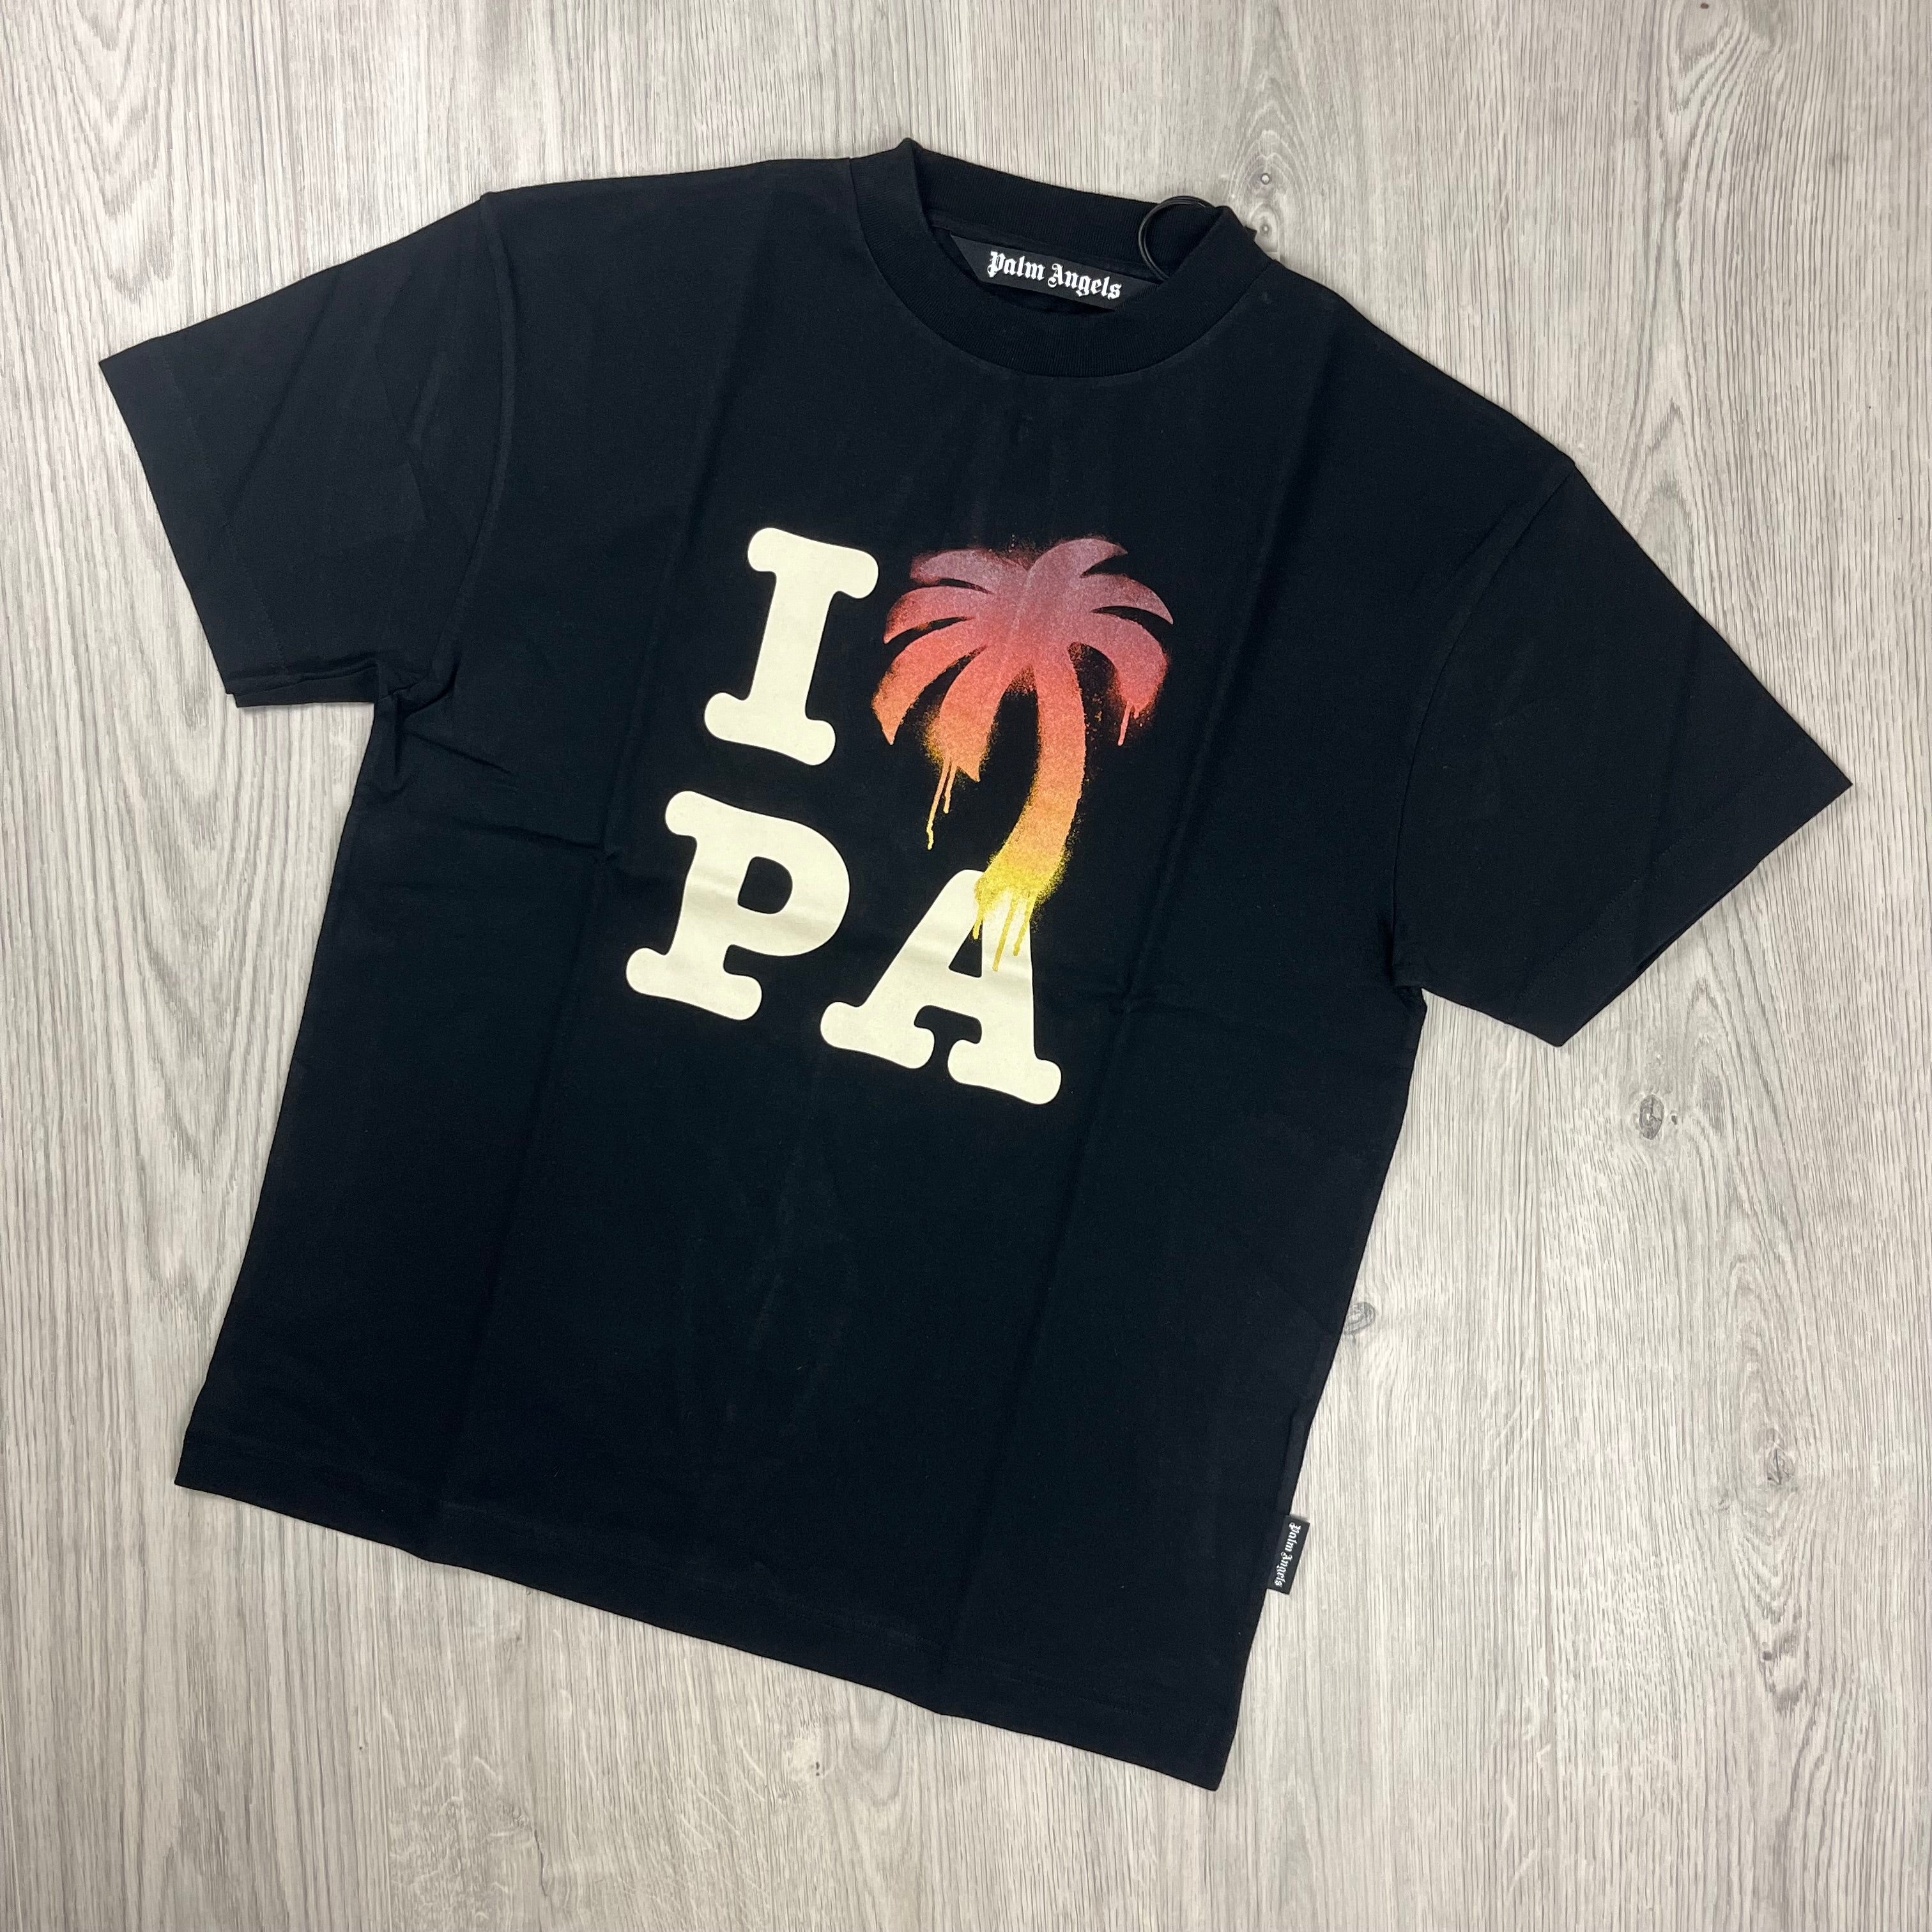 Palm Angels Printed T-Shirt